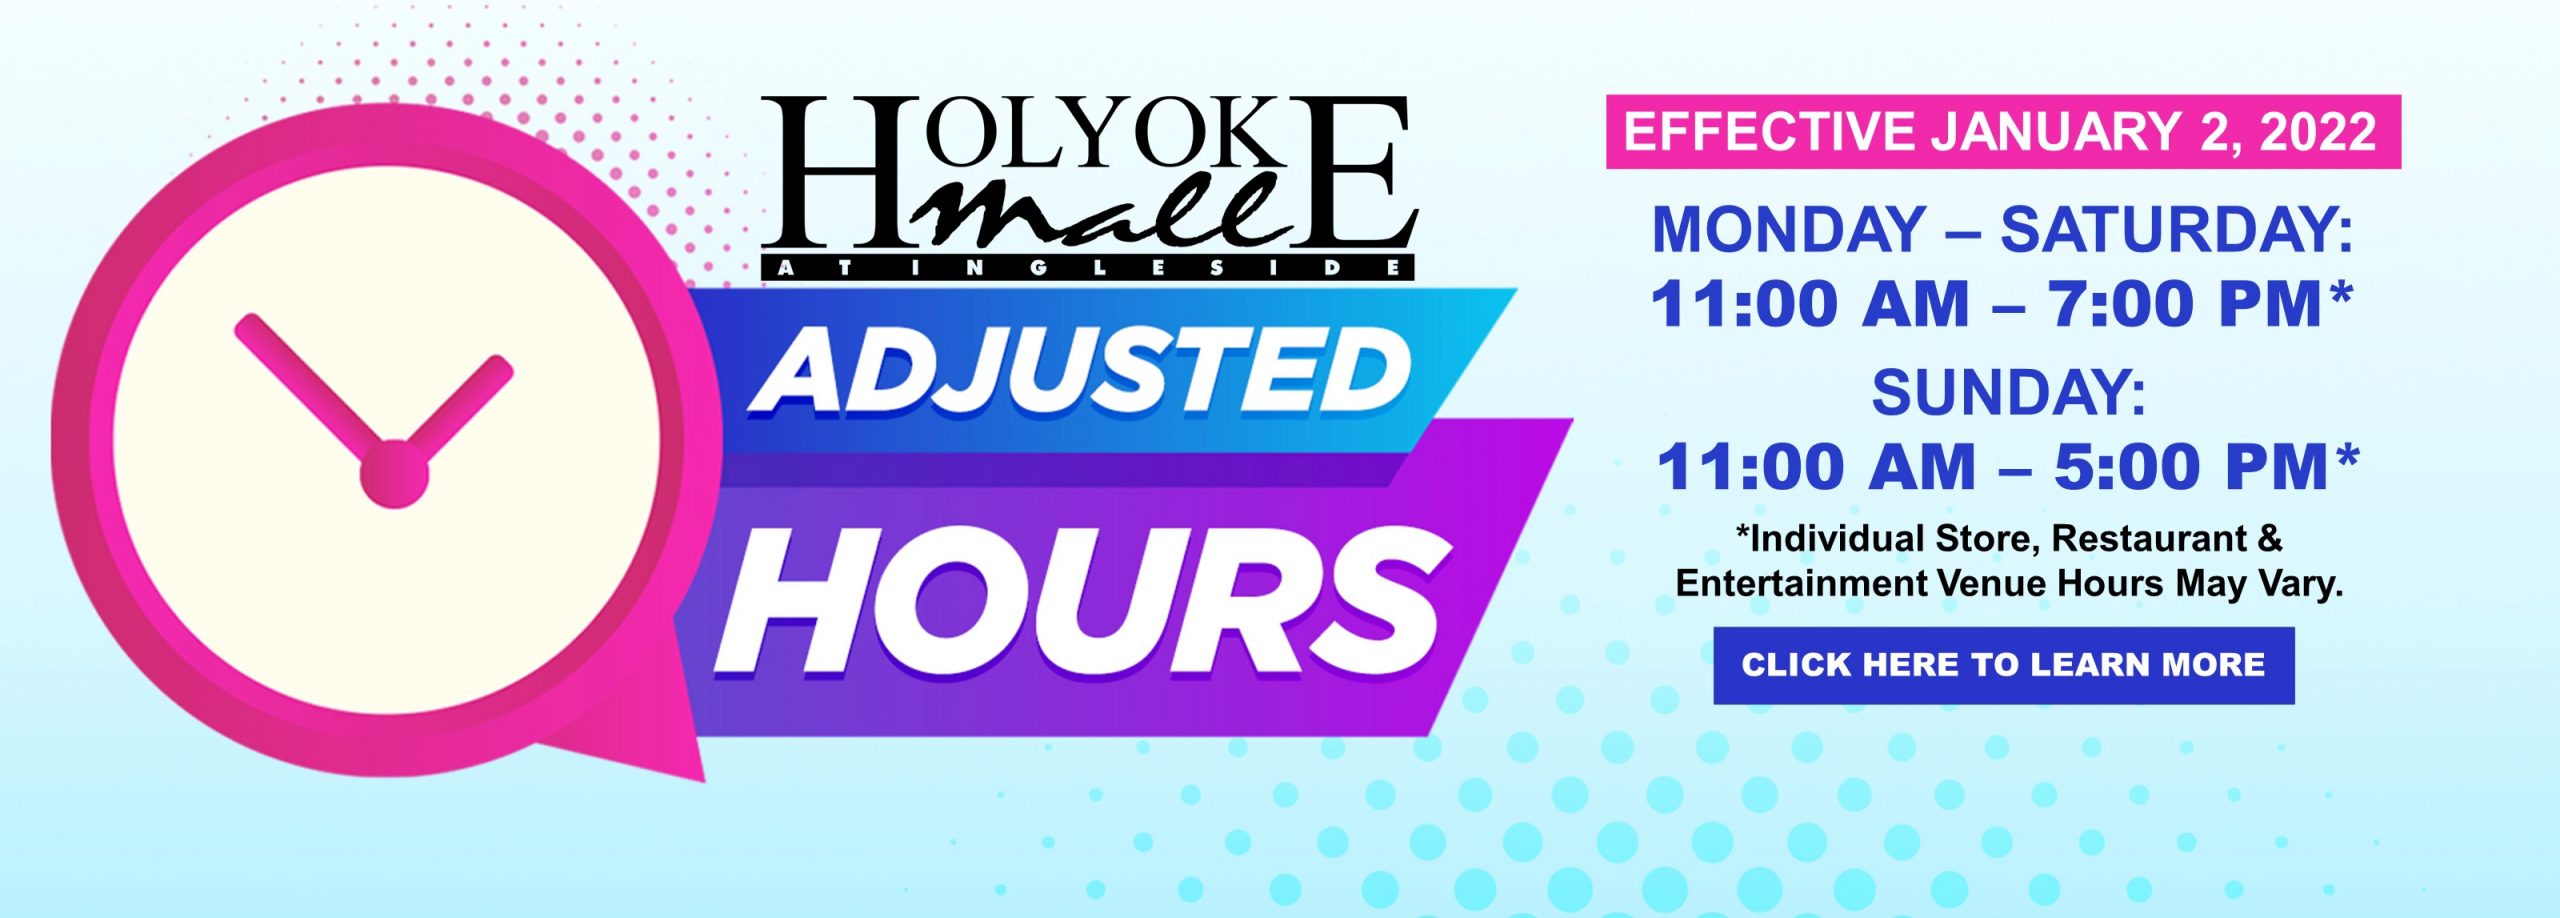 January 2022 New Hours Holyoke Mall 2400x860 1